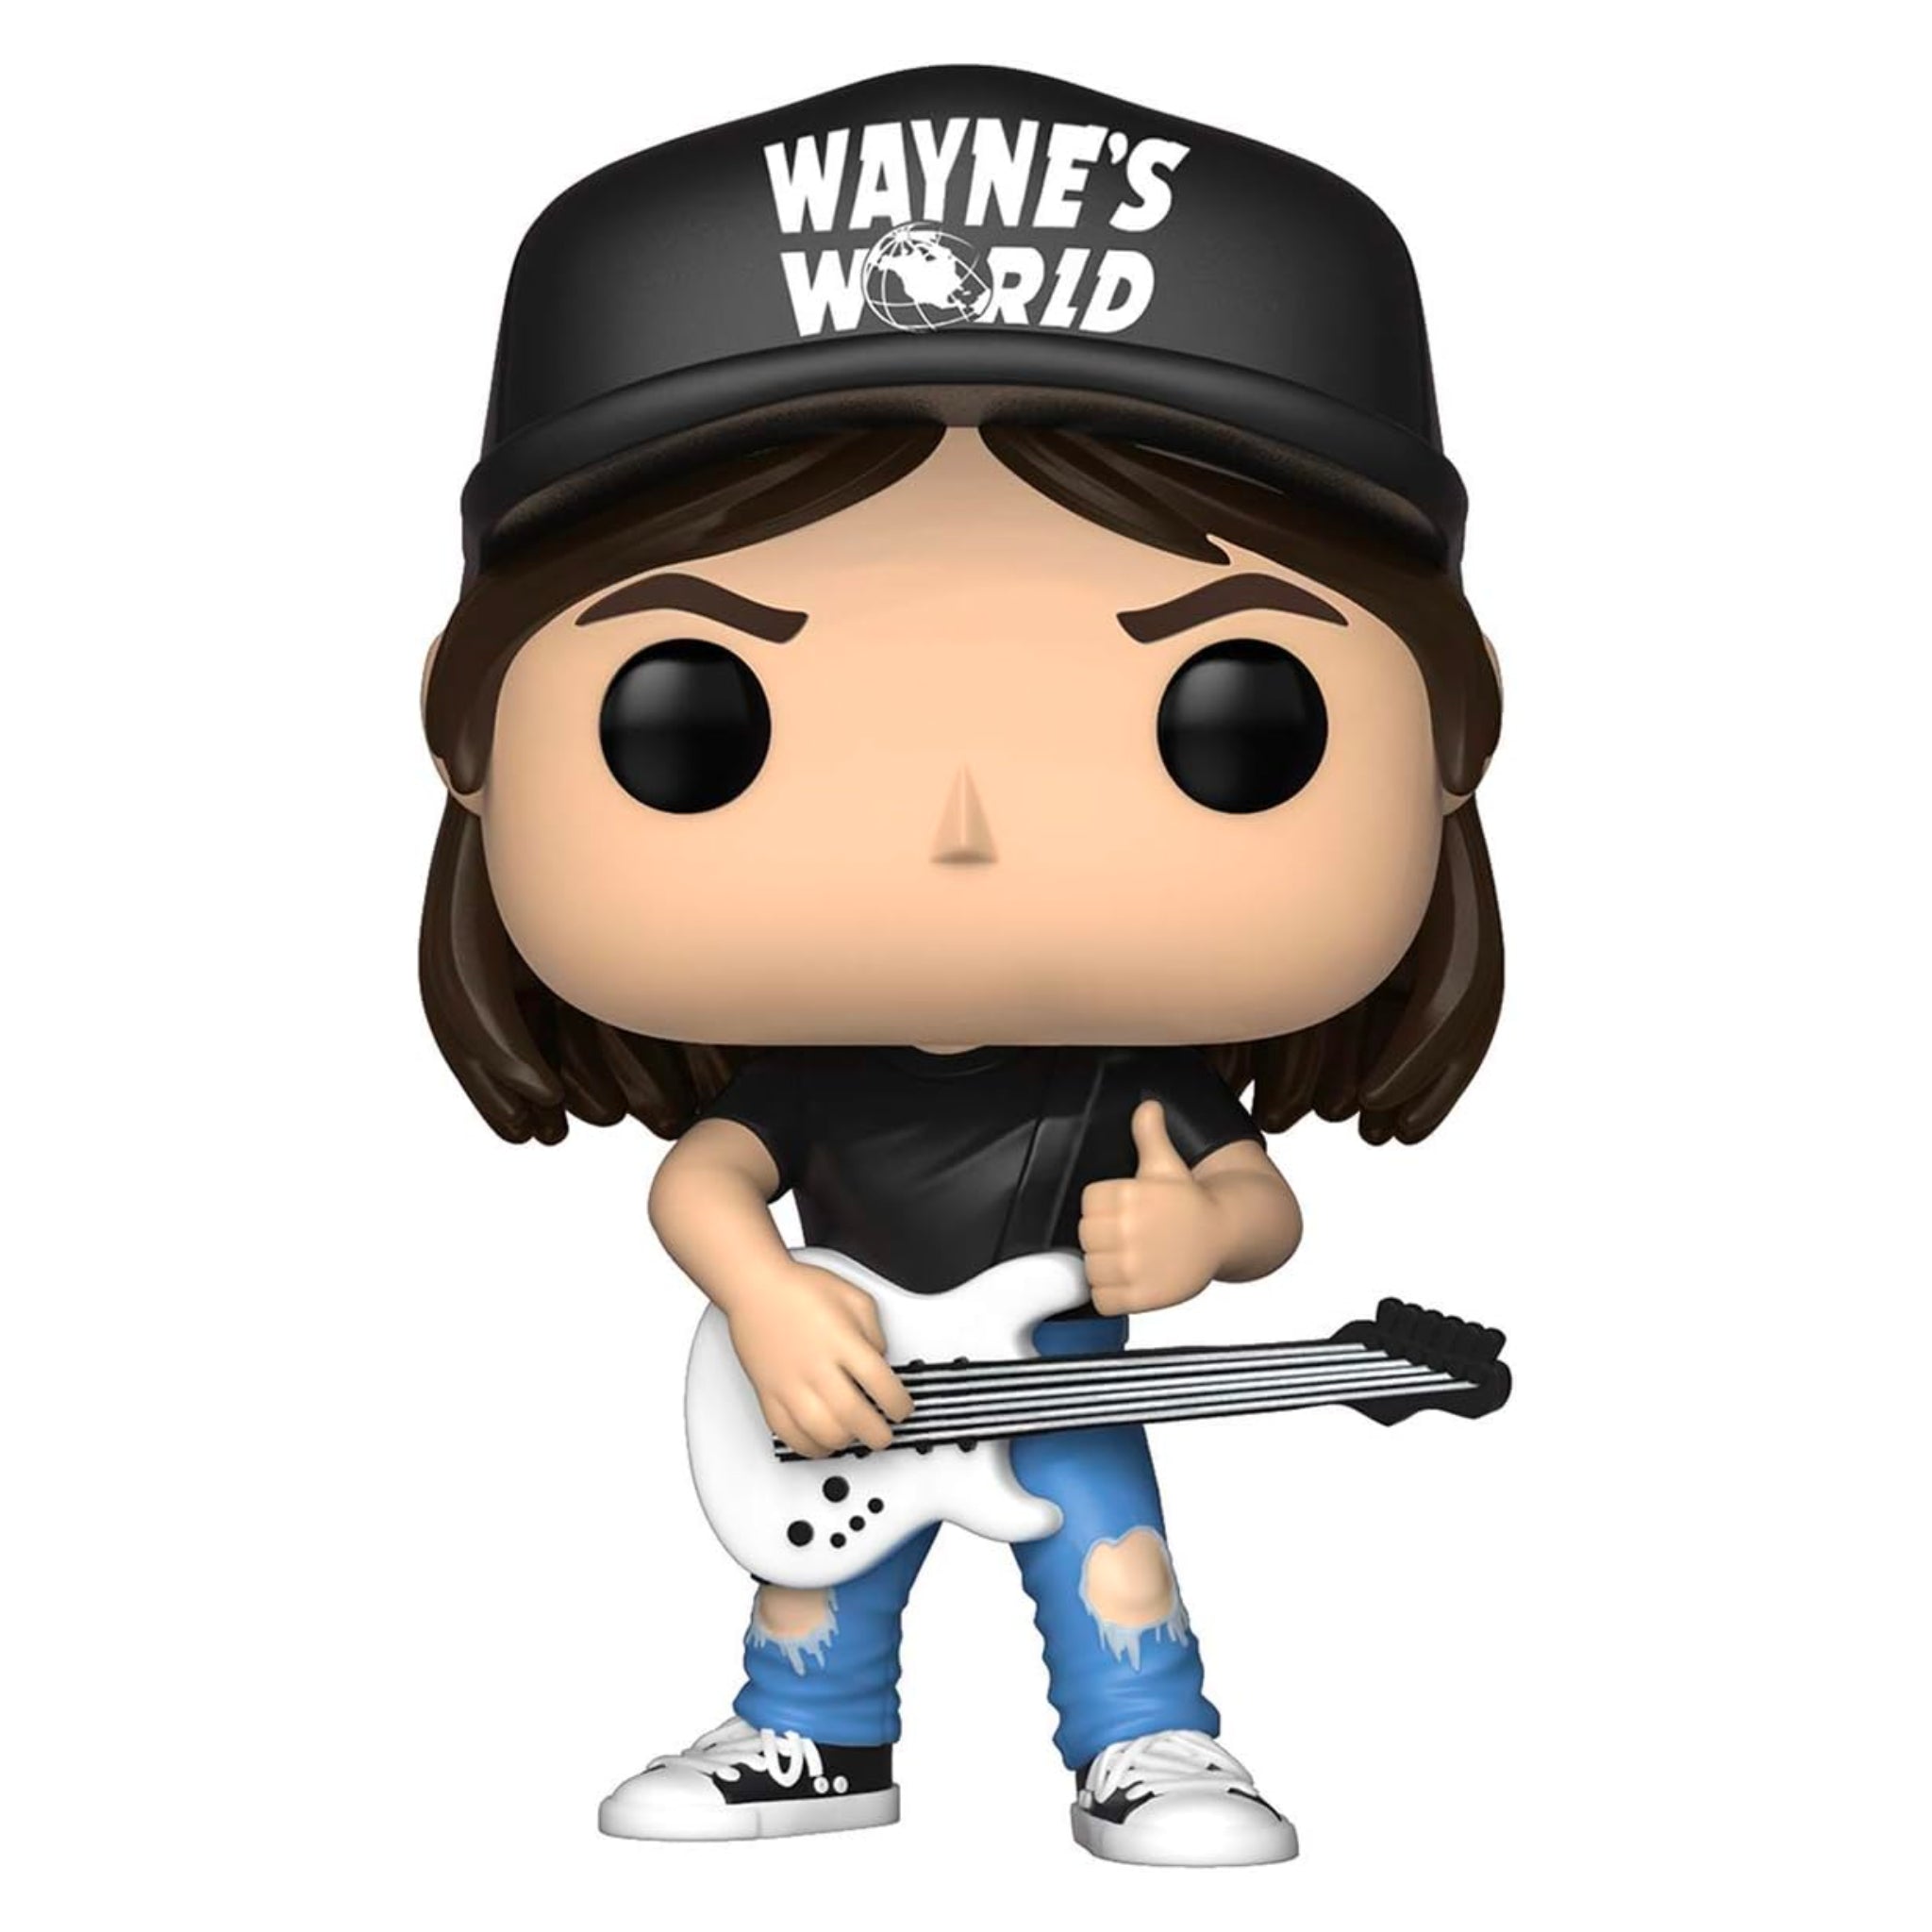 Wayne Funko Pop!